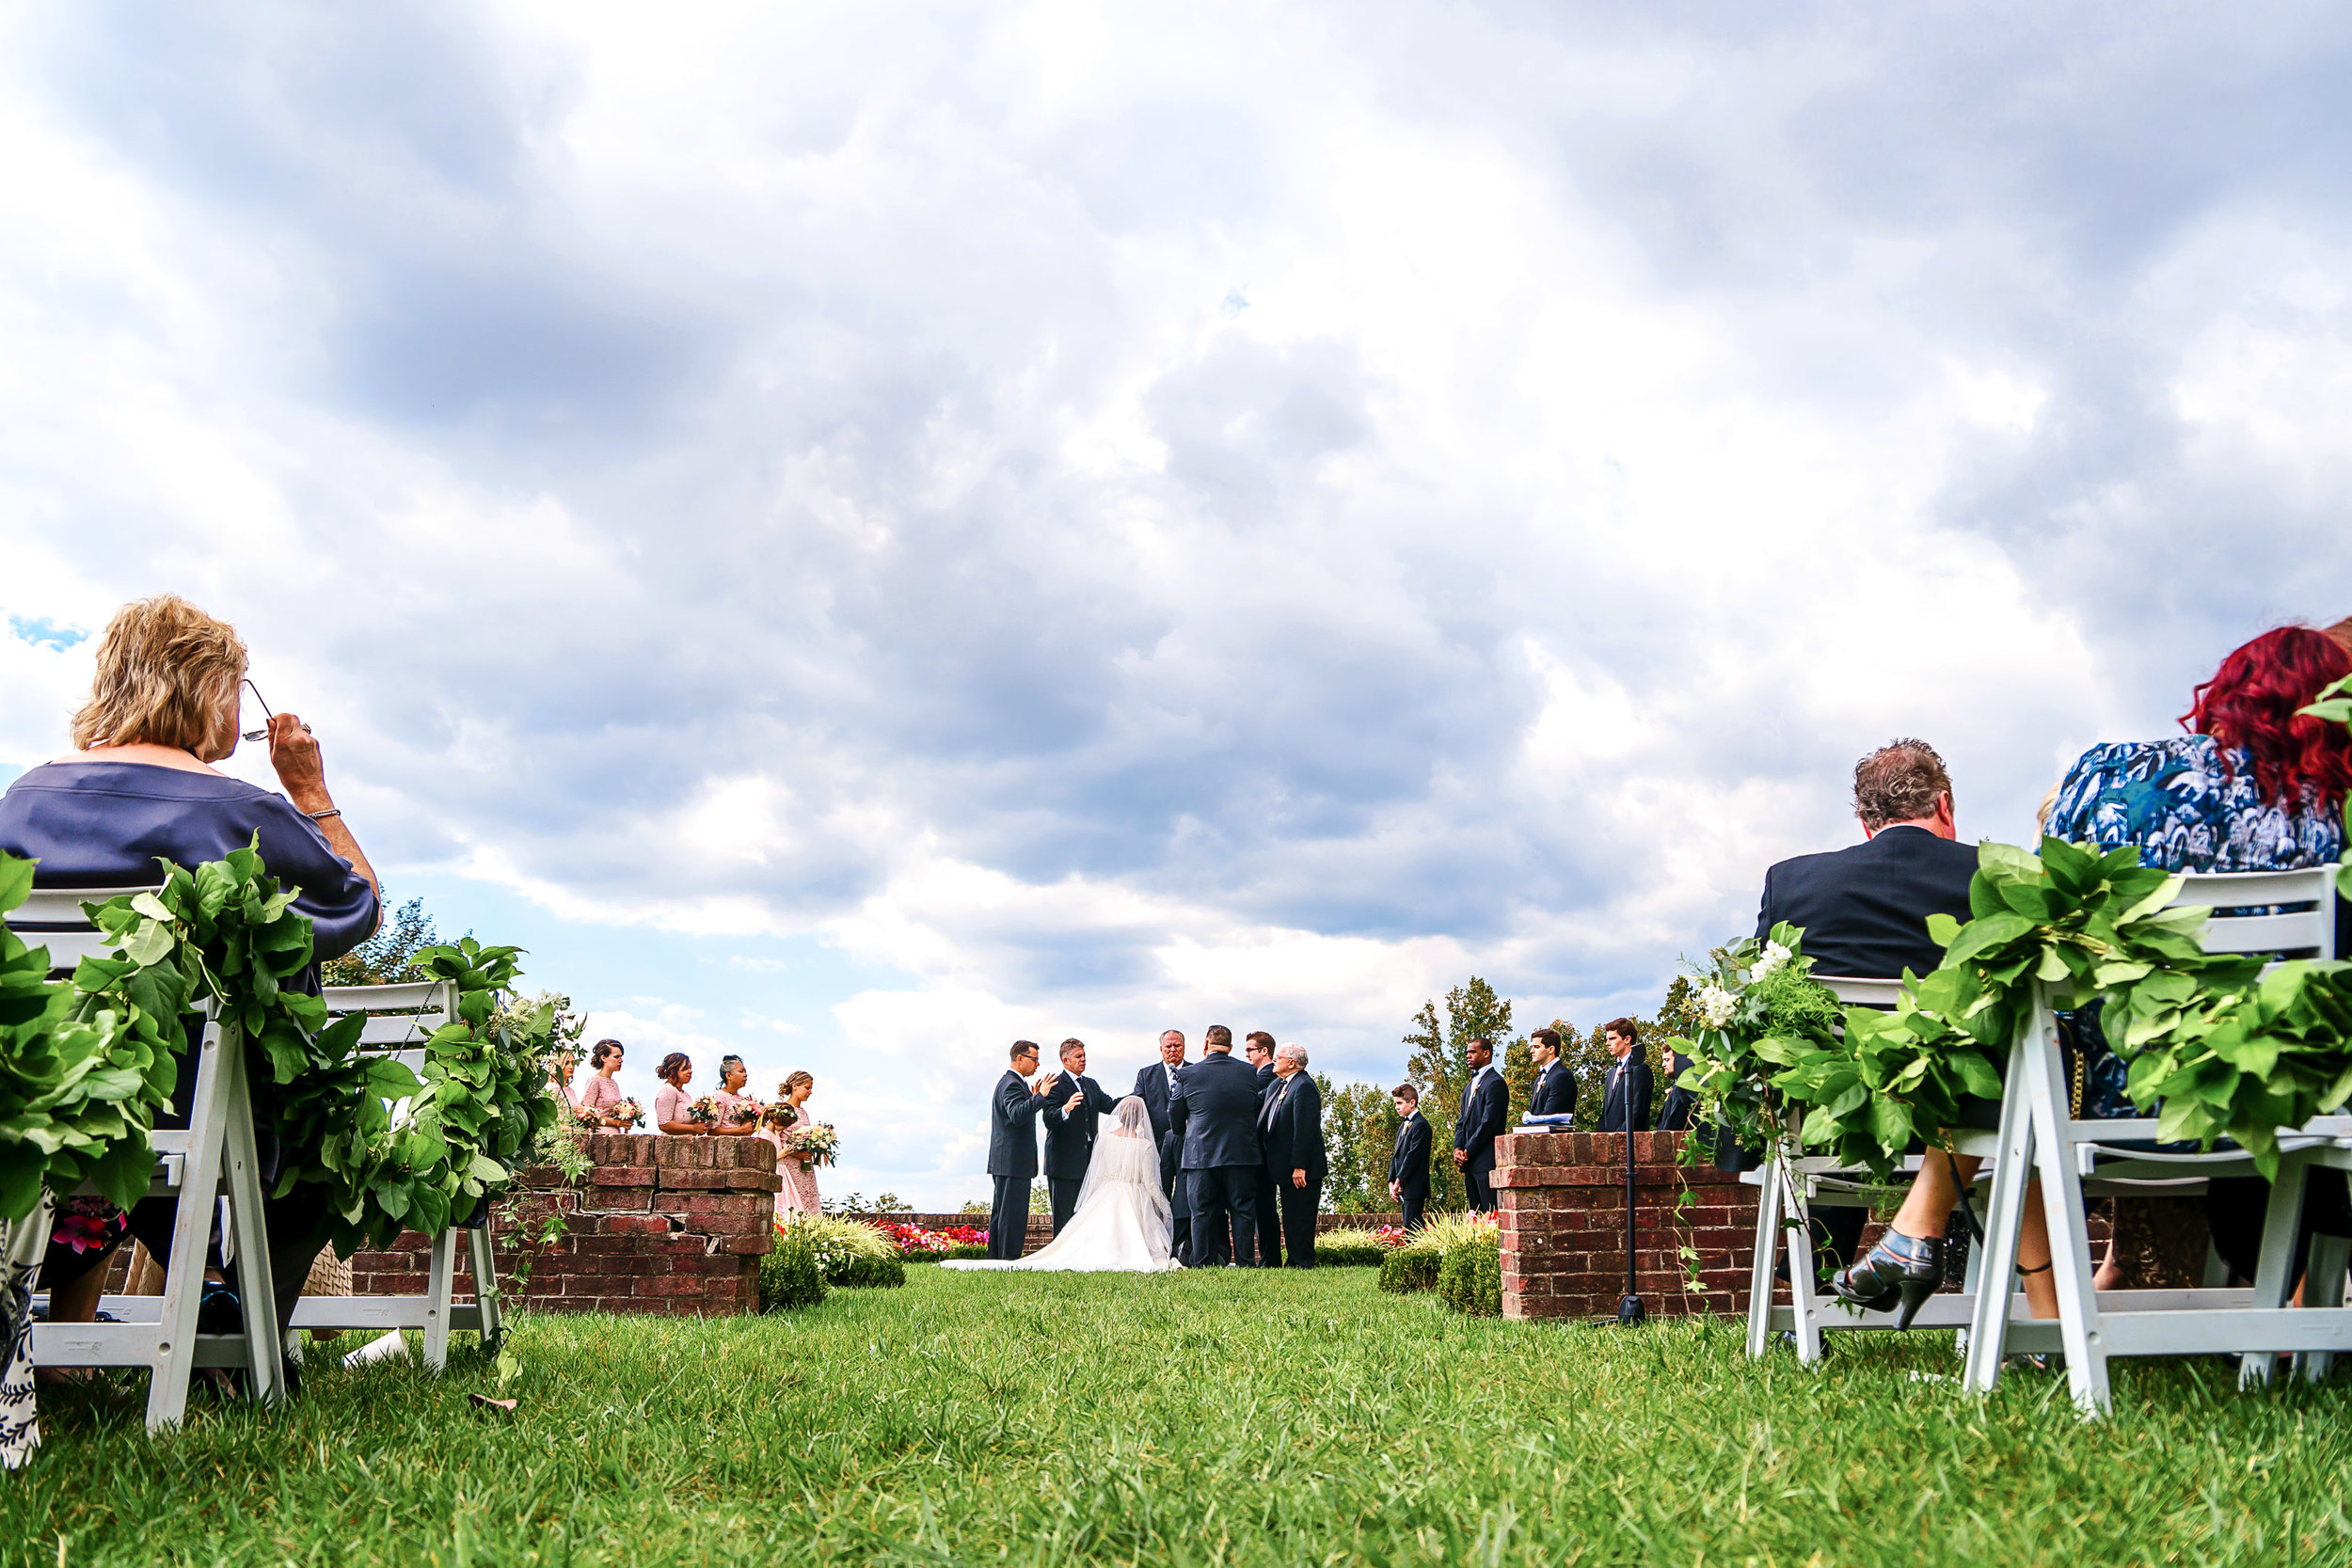 Dramatic clouds wedding ceremony photo at Oxon Hill Manor by Jessica Nazarova